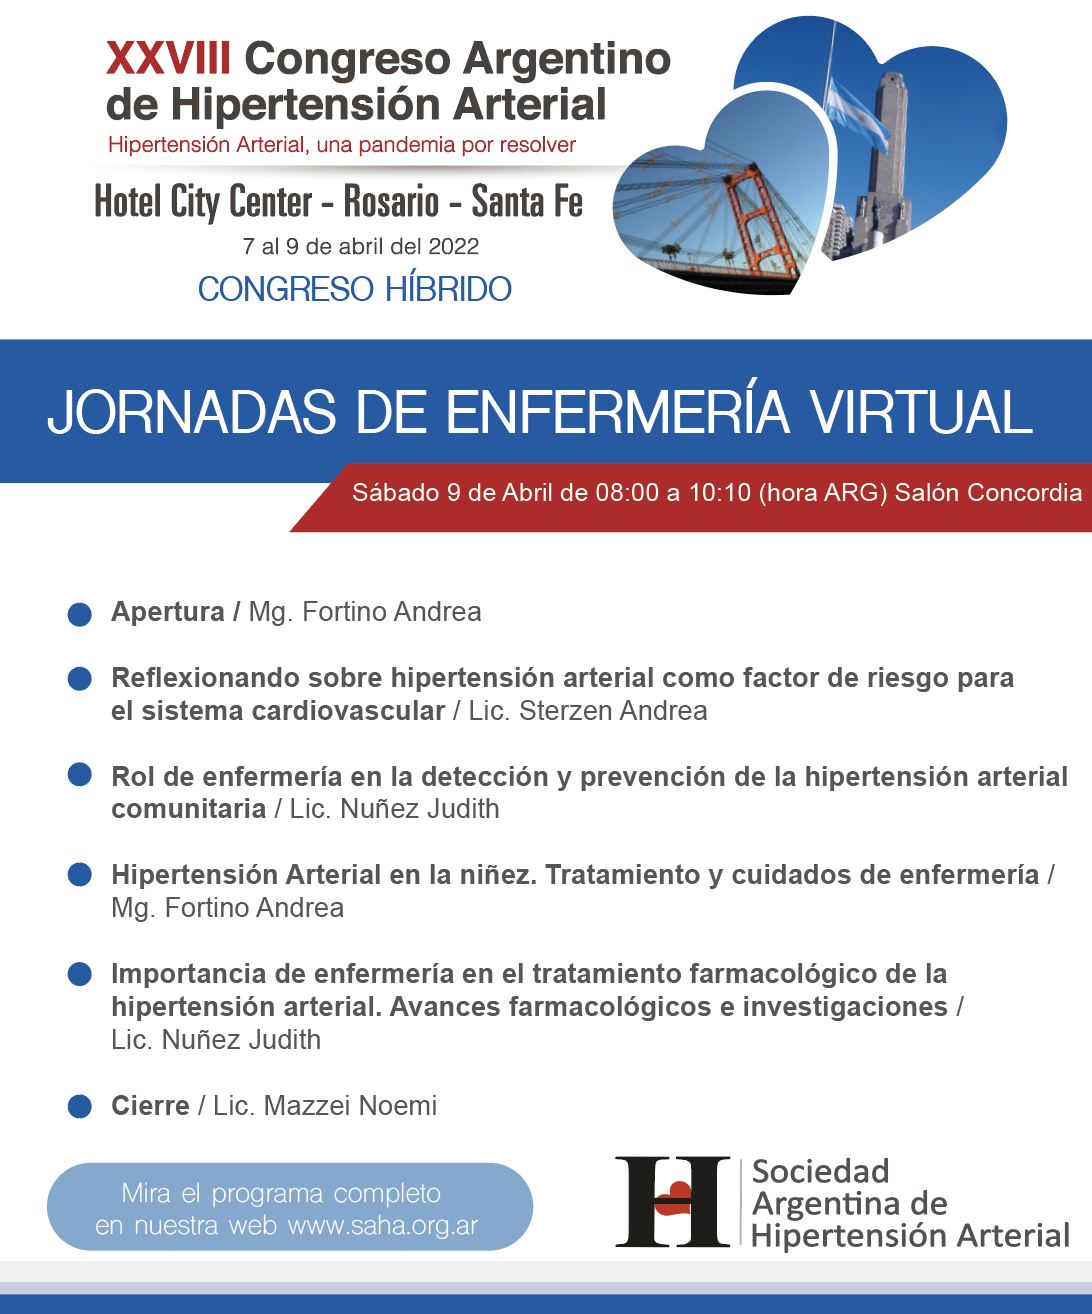 XXVIII Congreso Argentino de Hipertensión Arterial